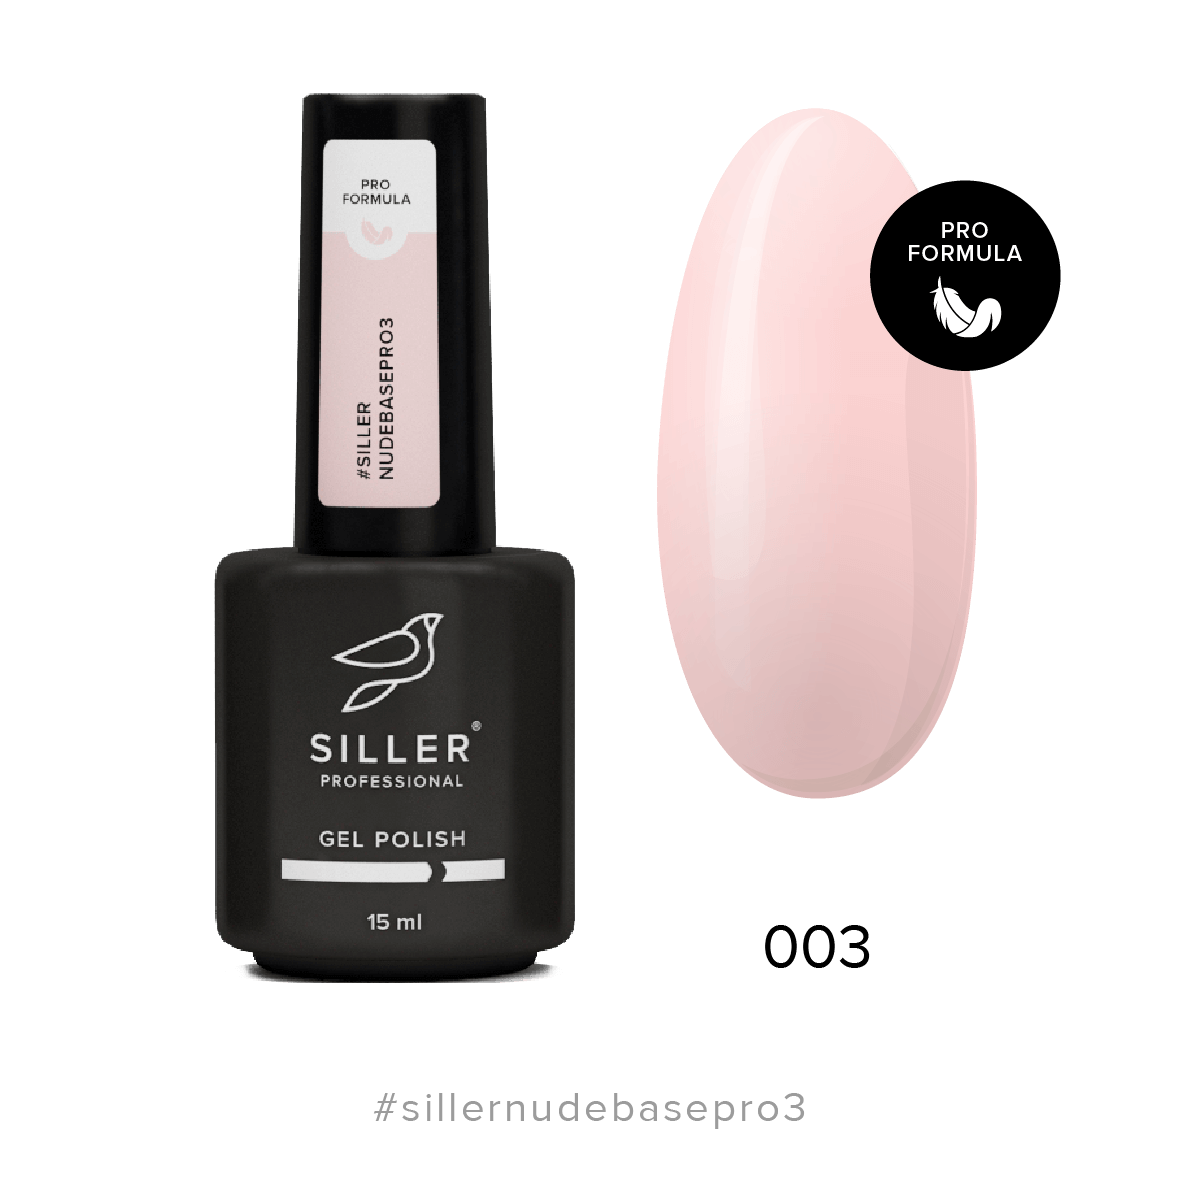 Siller Nude Base Pro #3 - Milky Pink